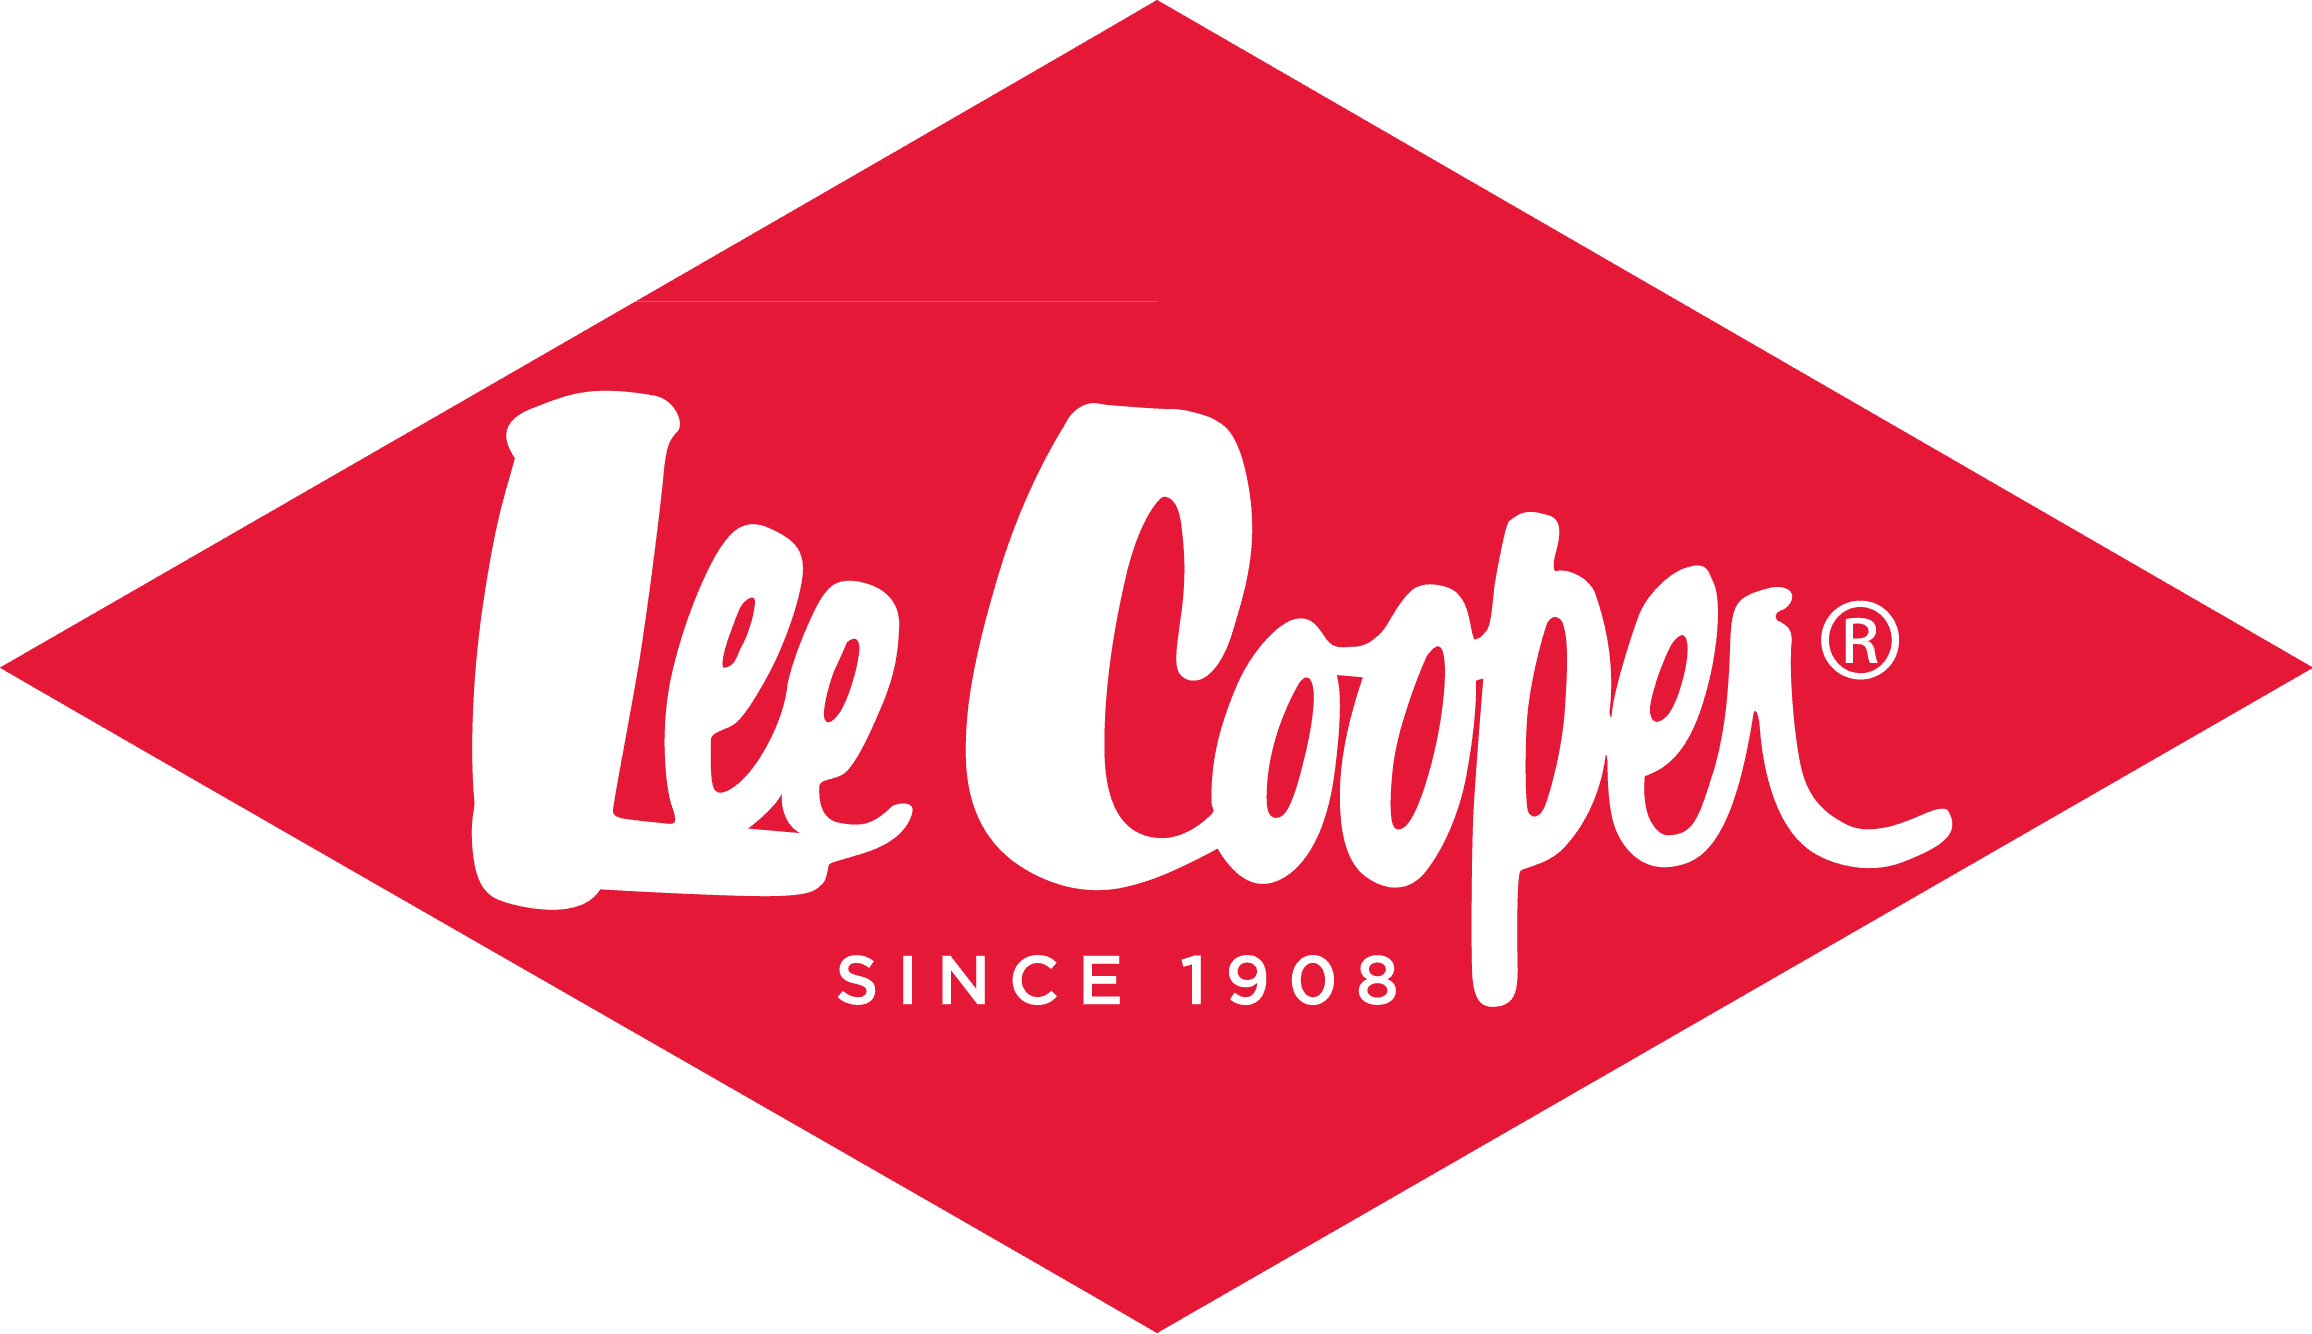 formal shoe brands - Lee Cooper